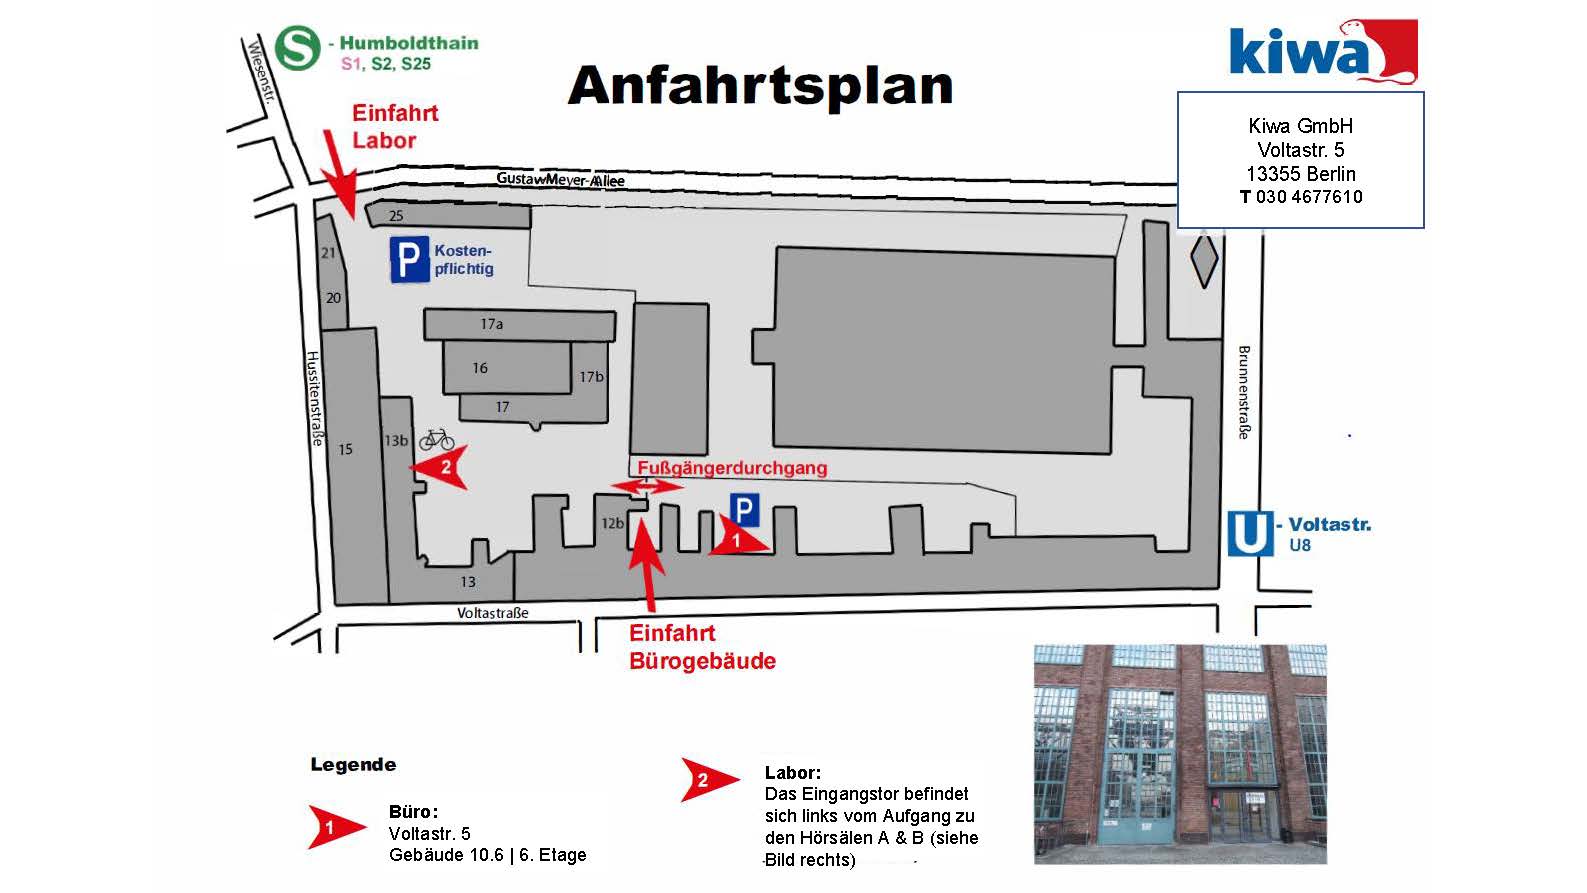 Anfahrtsplan Kiwa Berlin, Gustav-Meyer-Allee 25, Voltastraße 5.jpg